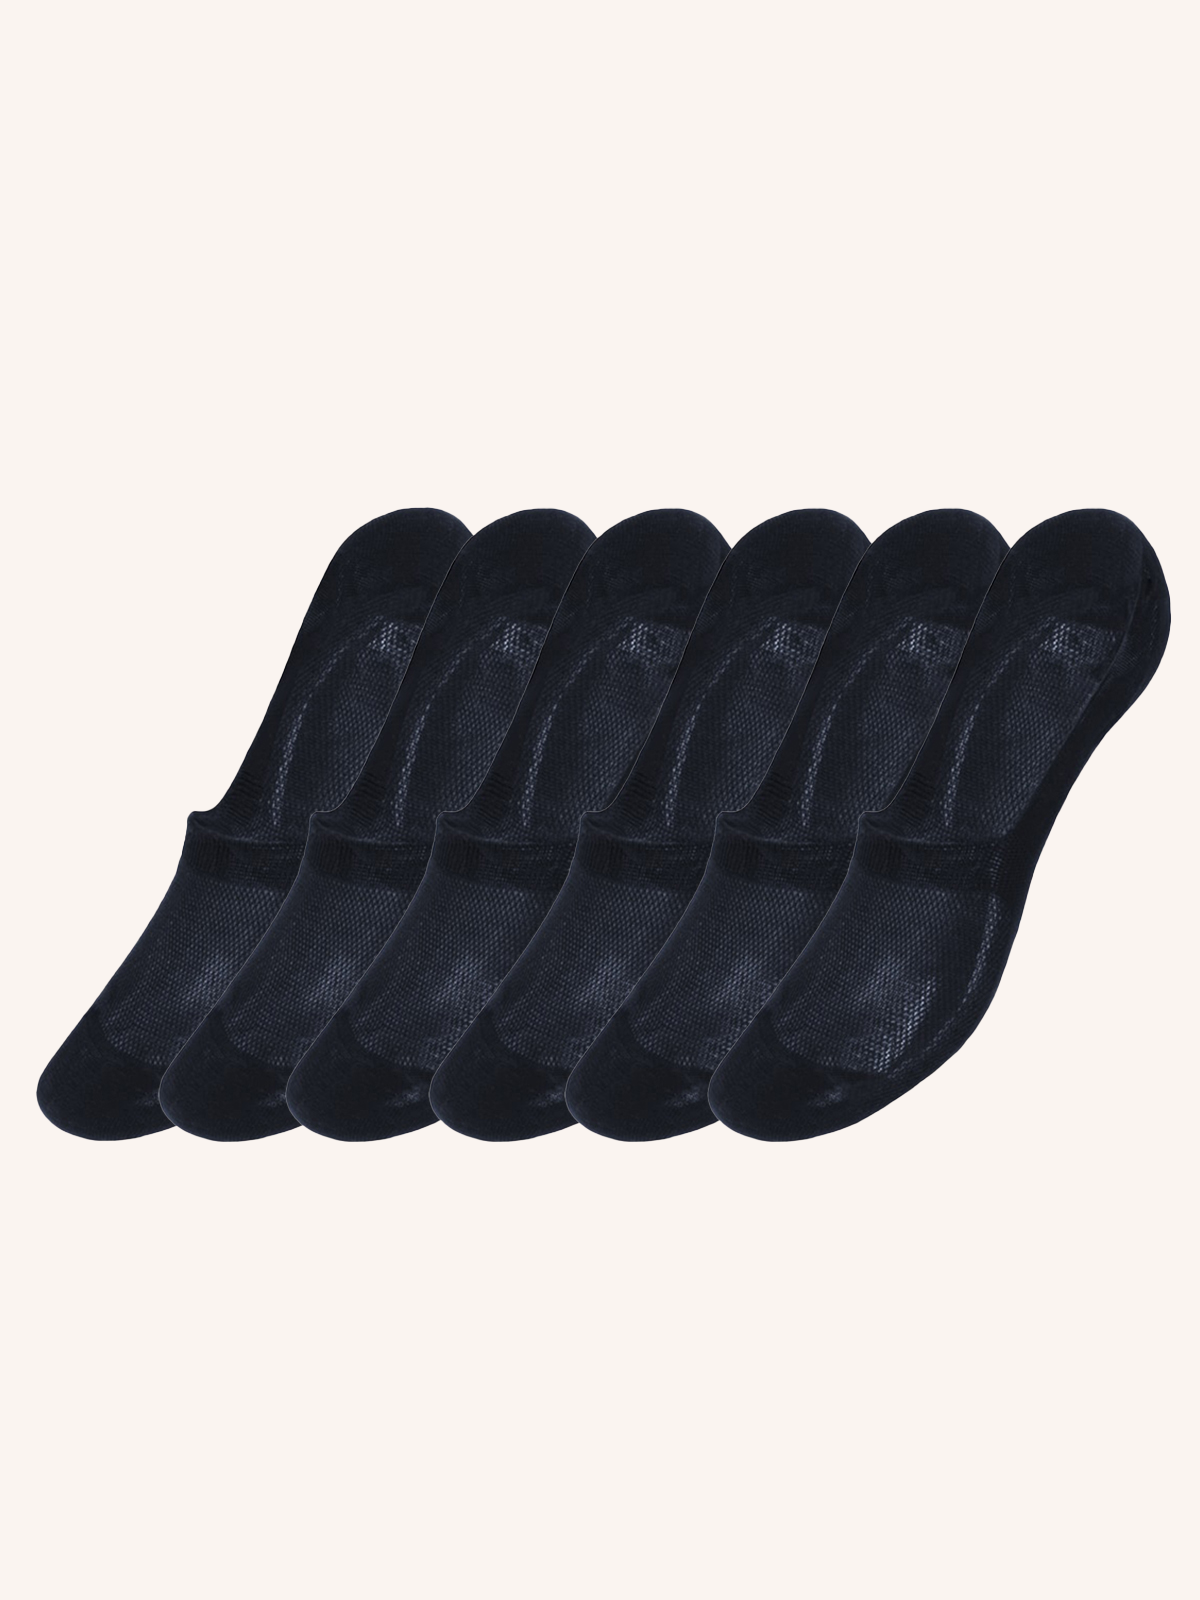 Cotton Shoe Liner for Men | Plain Color | Pack of 6 Pairs | Insole U Insole